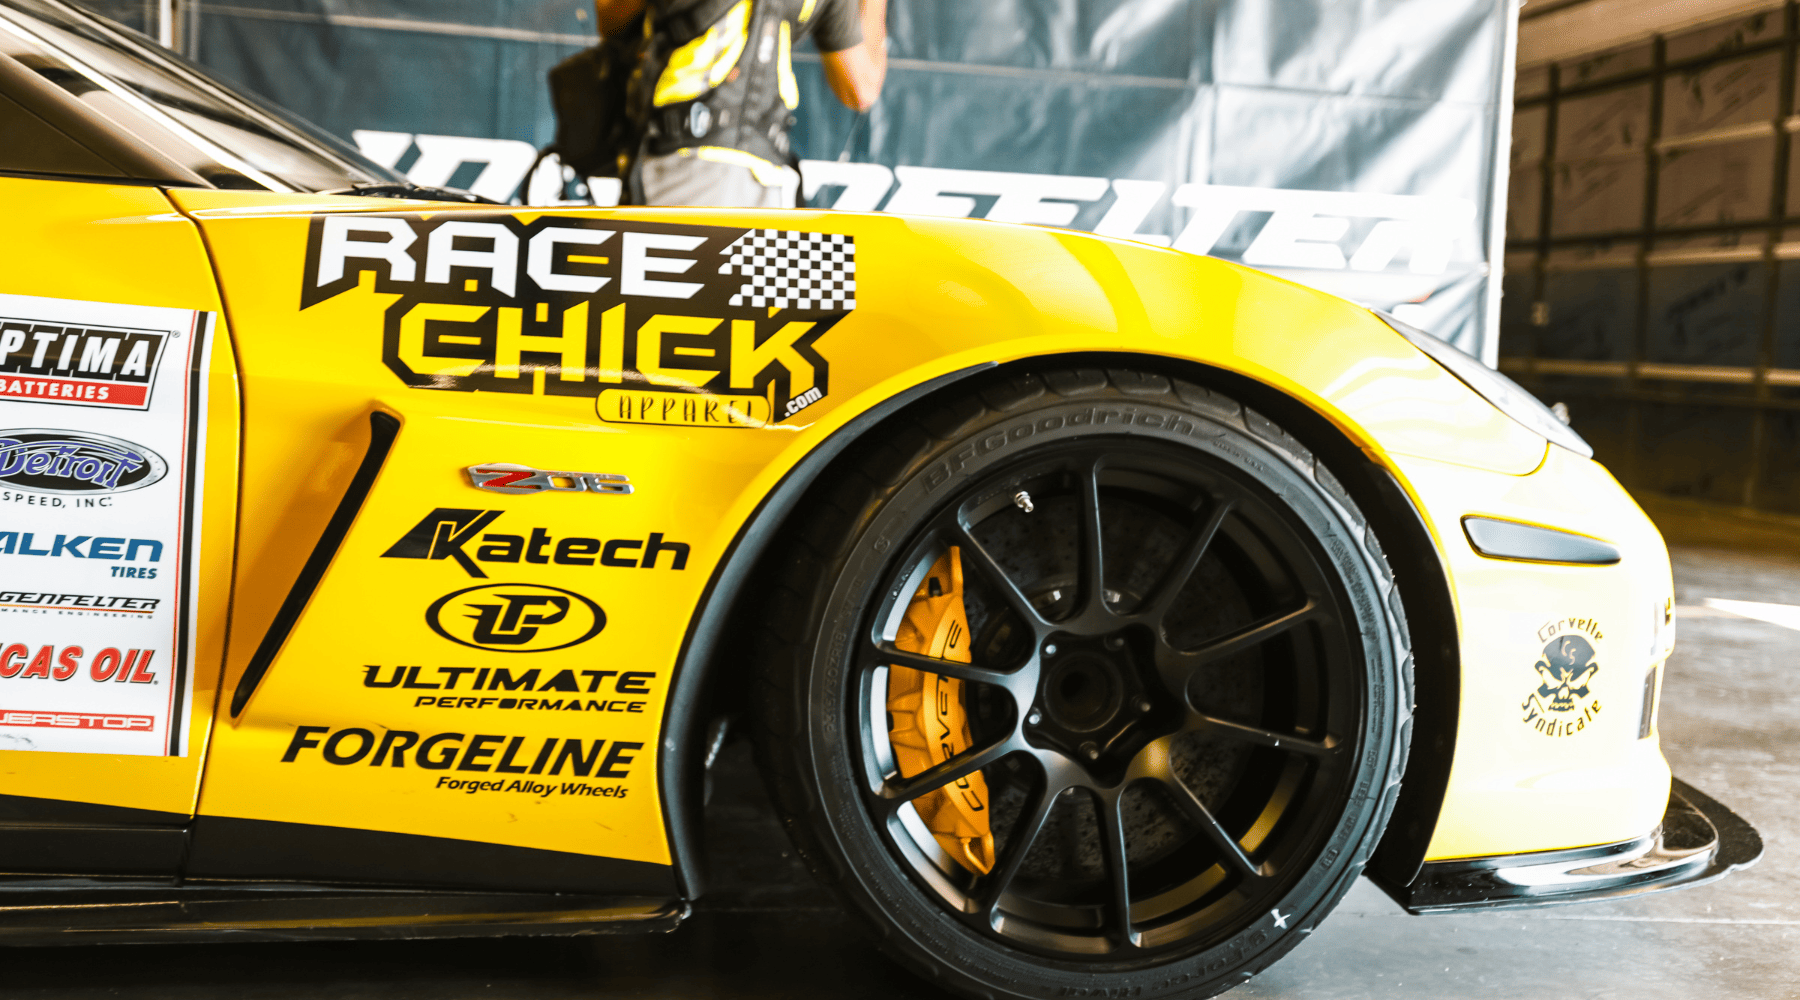 Racechick_Race_Car